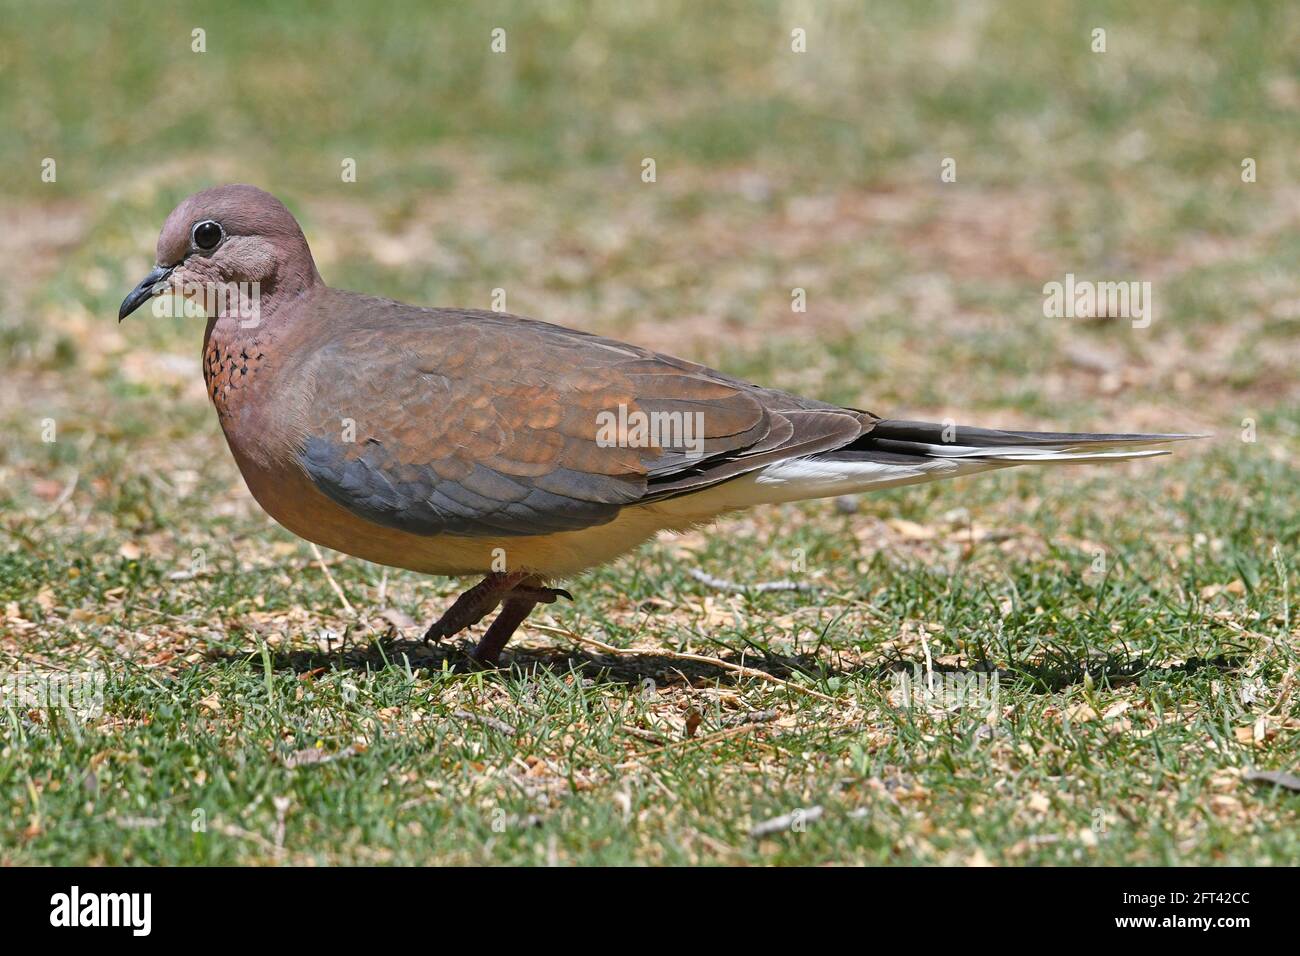 laughing dove, Spilopelia senegalensis walk on grass Stock Photo